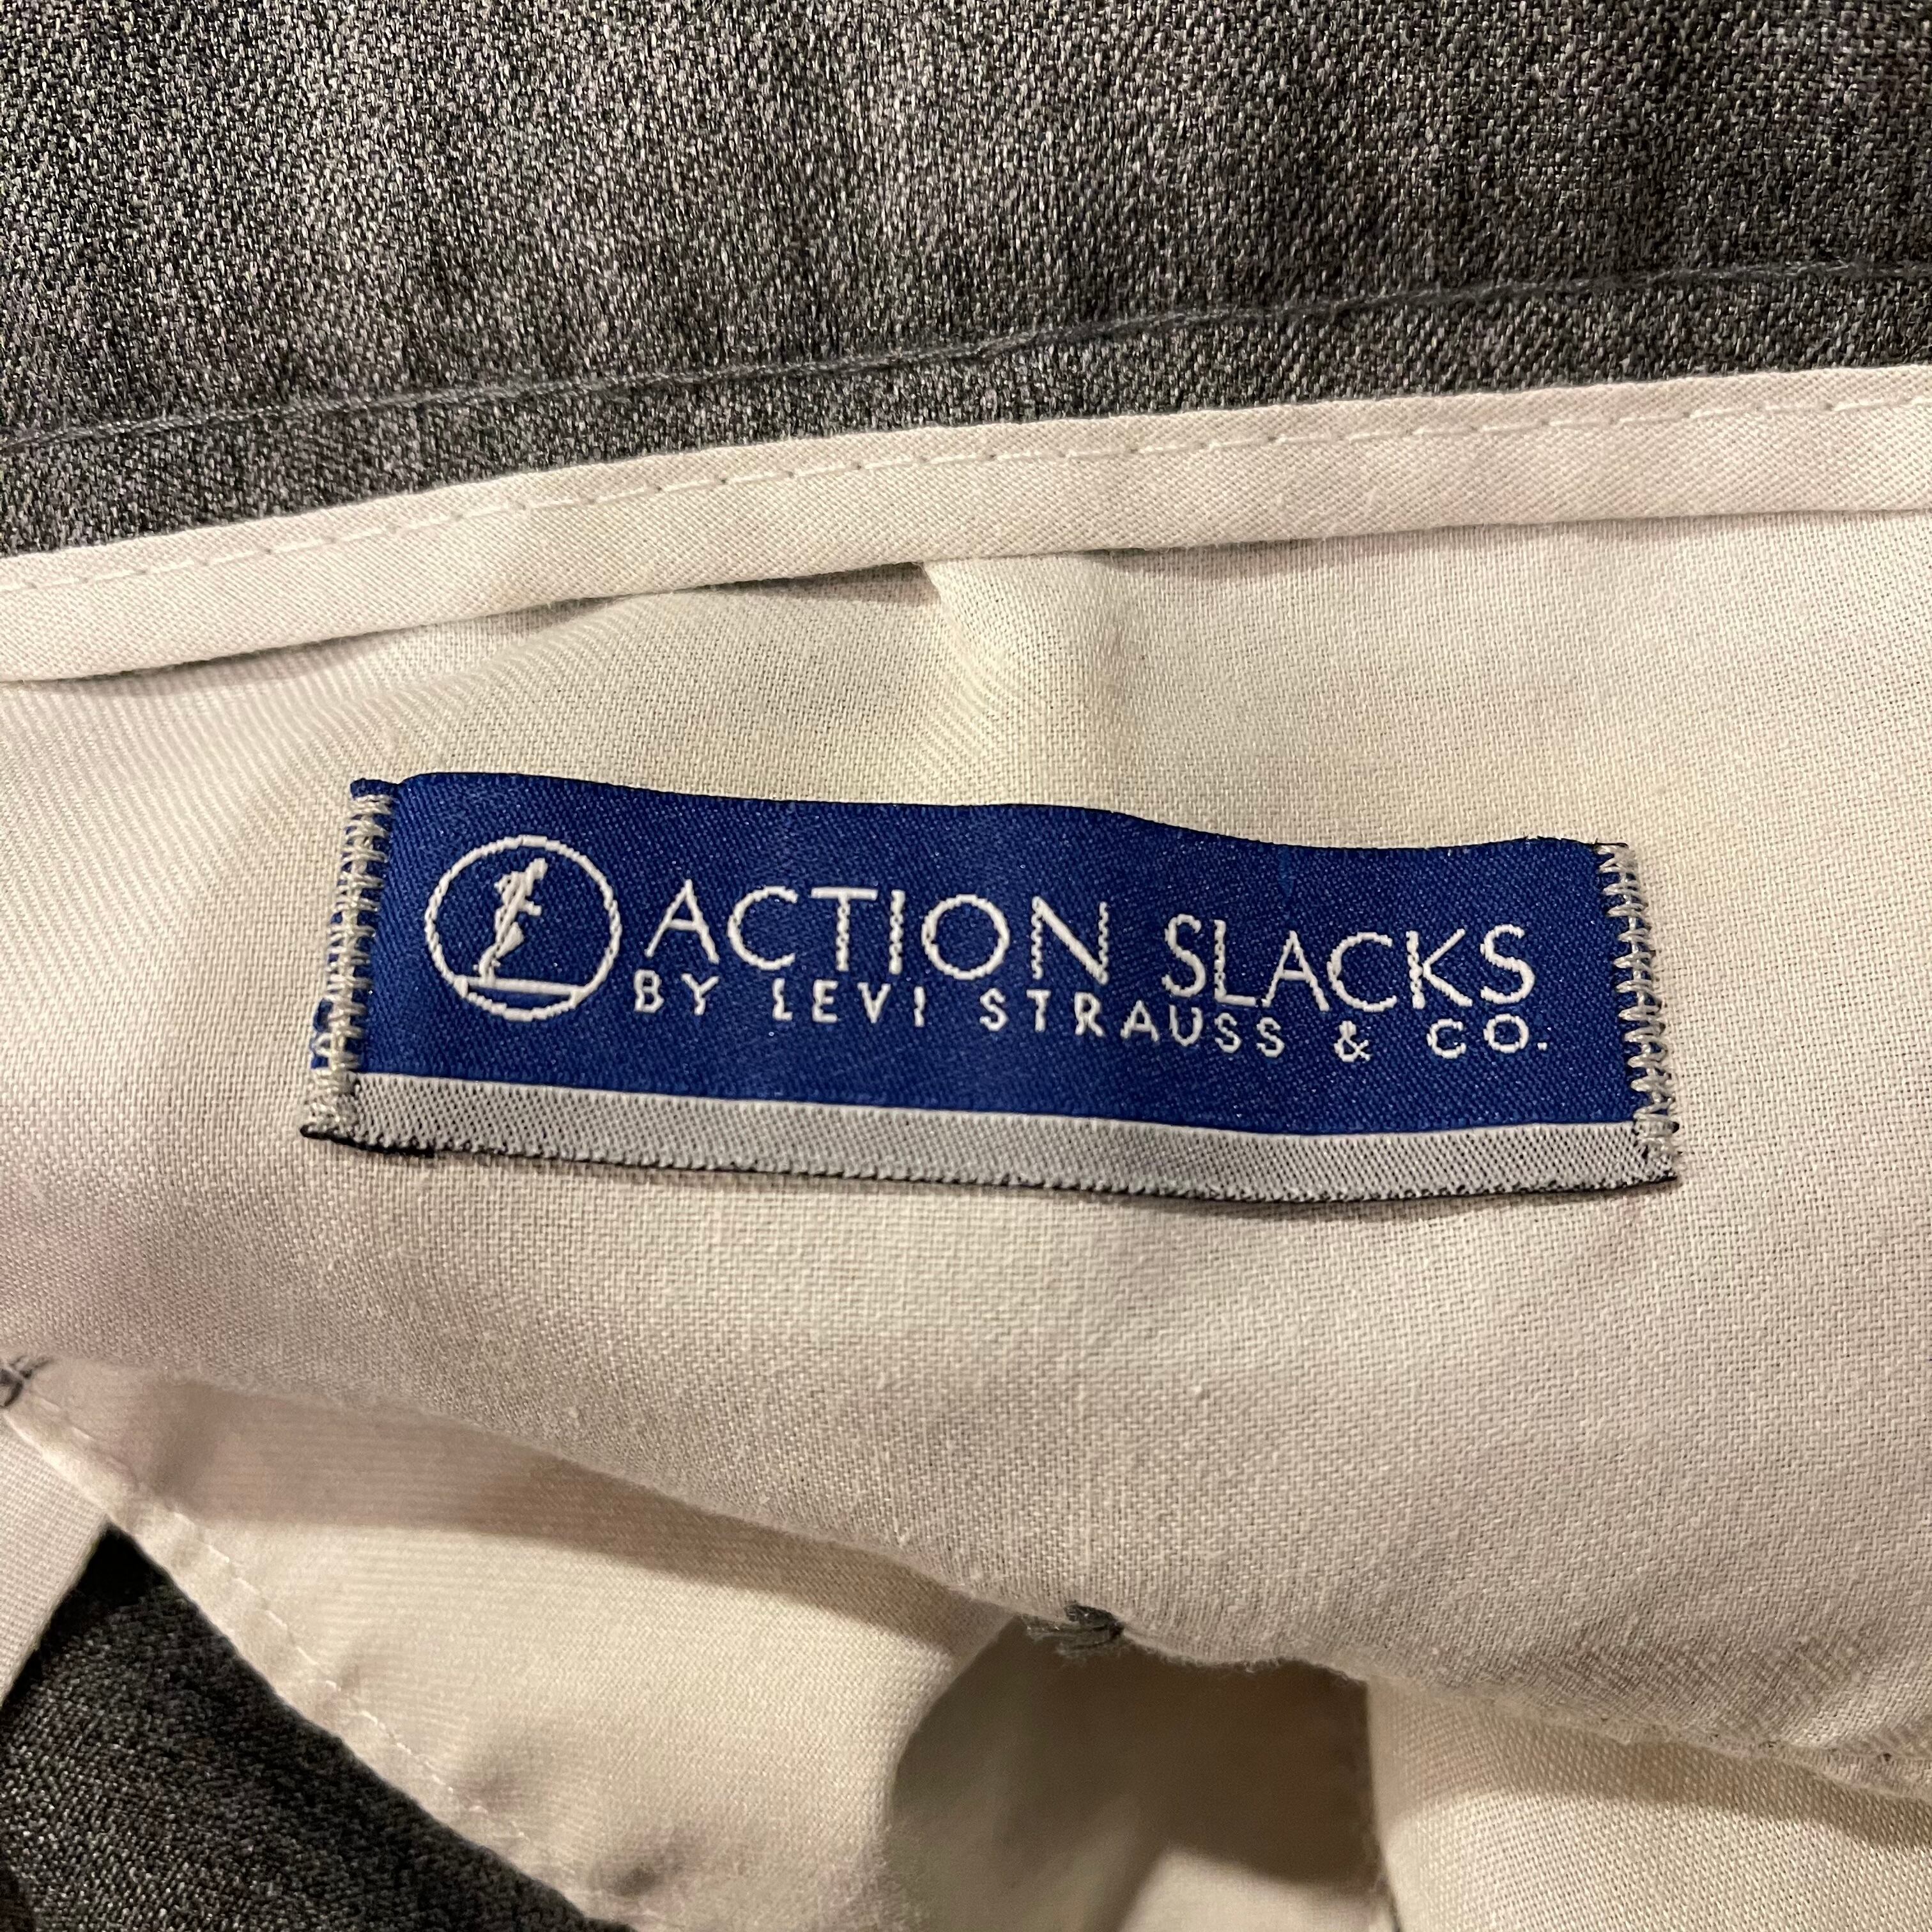 Levis Action Slacks | VOSTOK